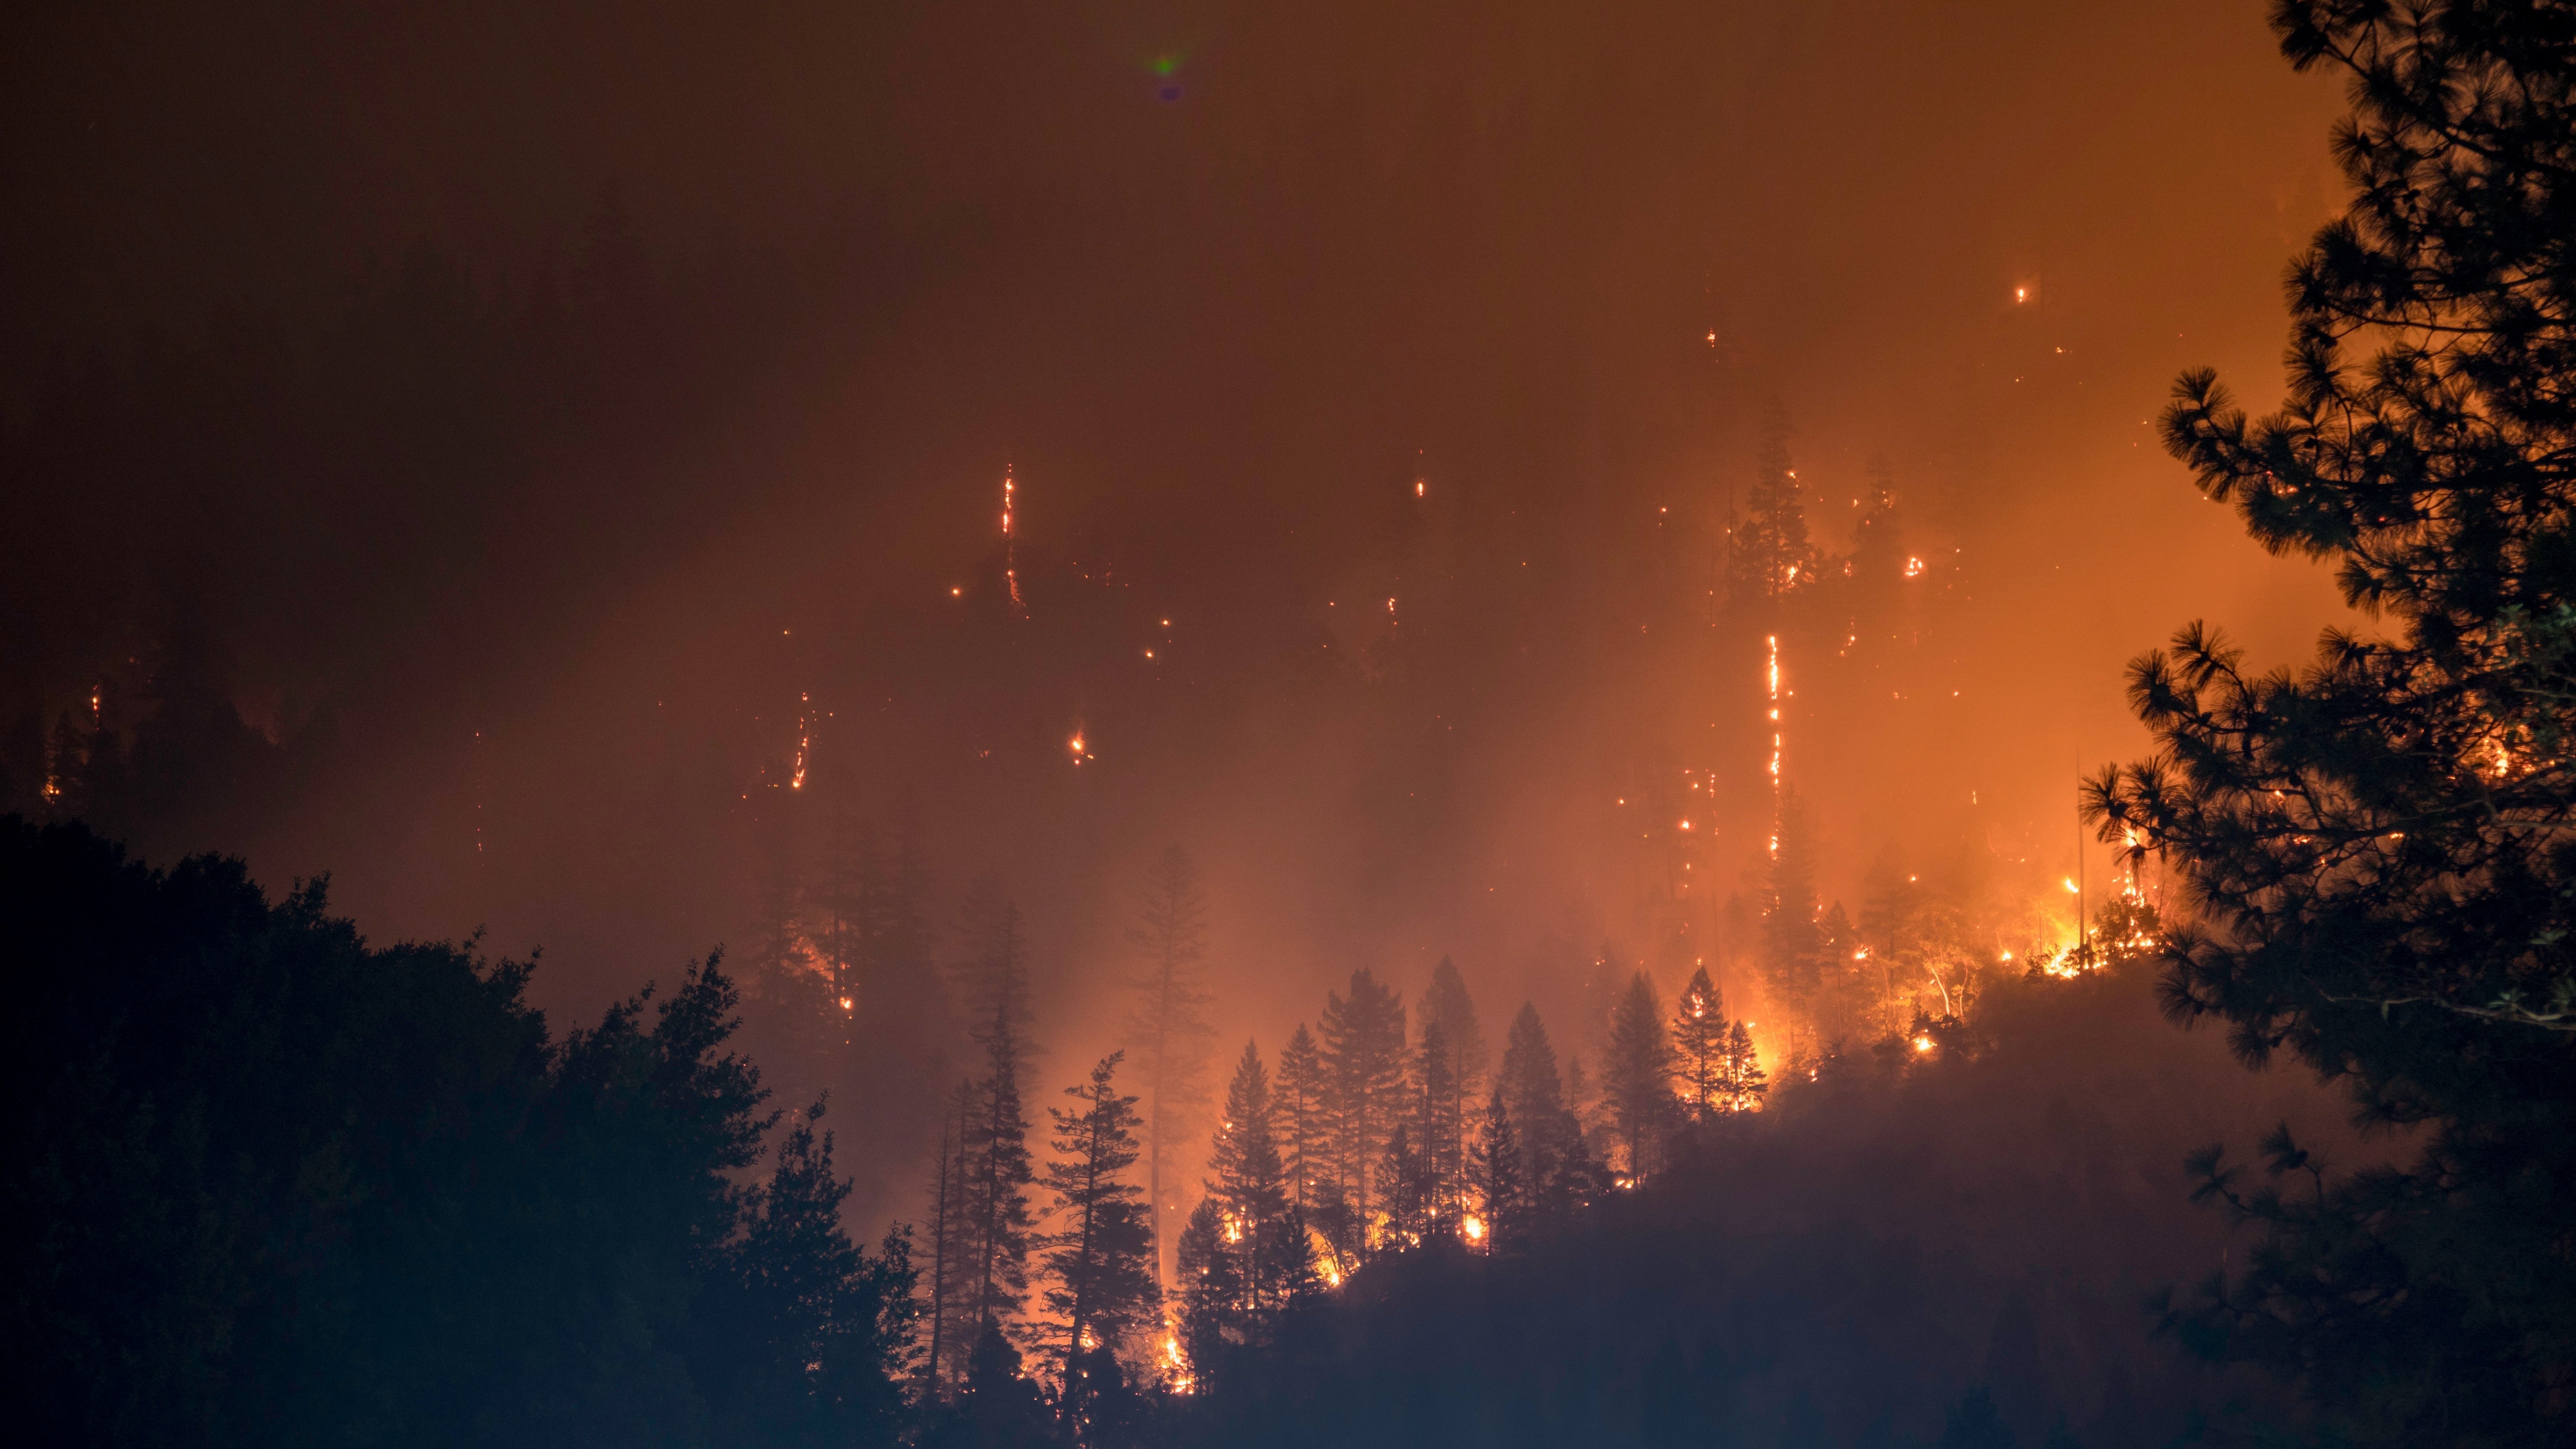 A raging forest fire | Source: Unsplash.com